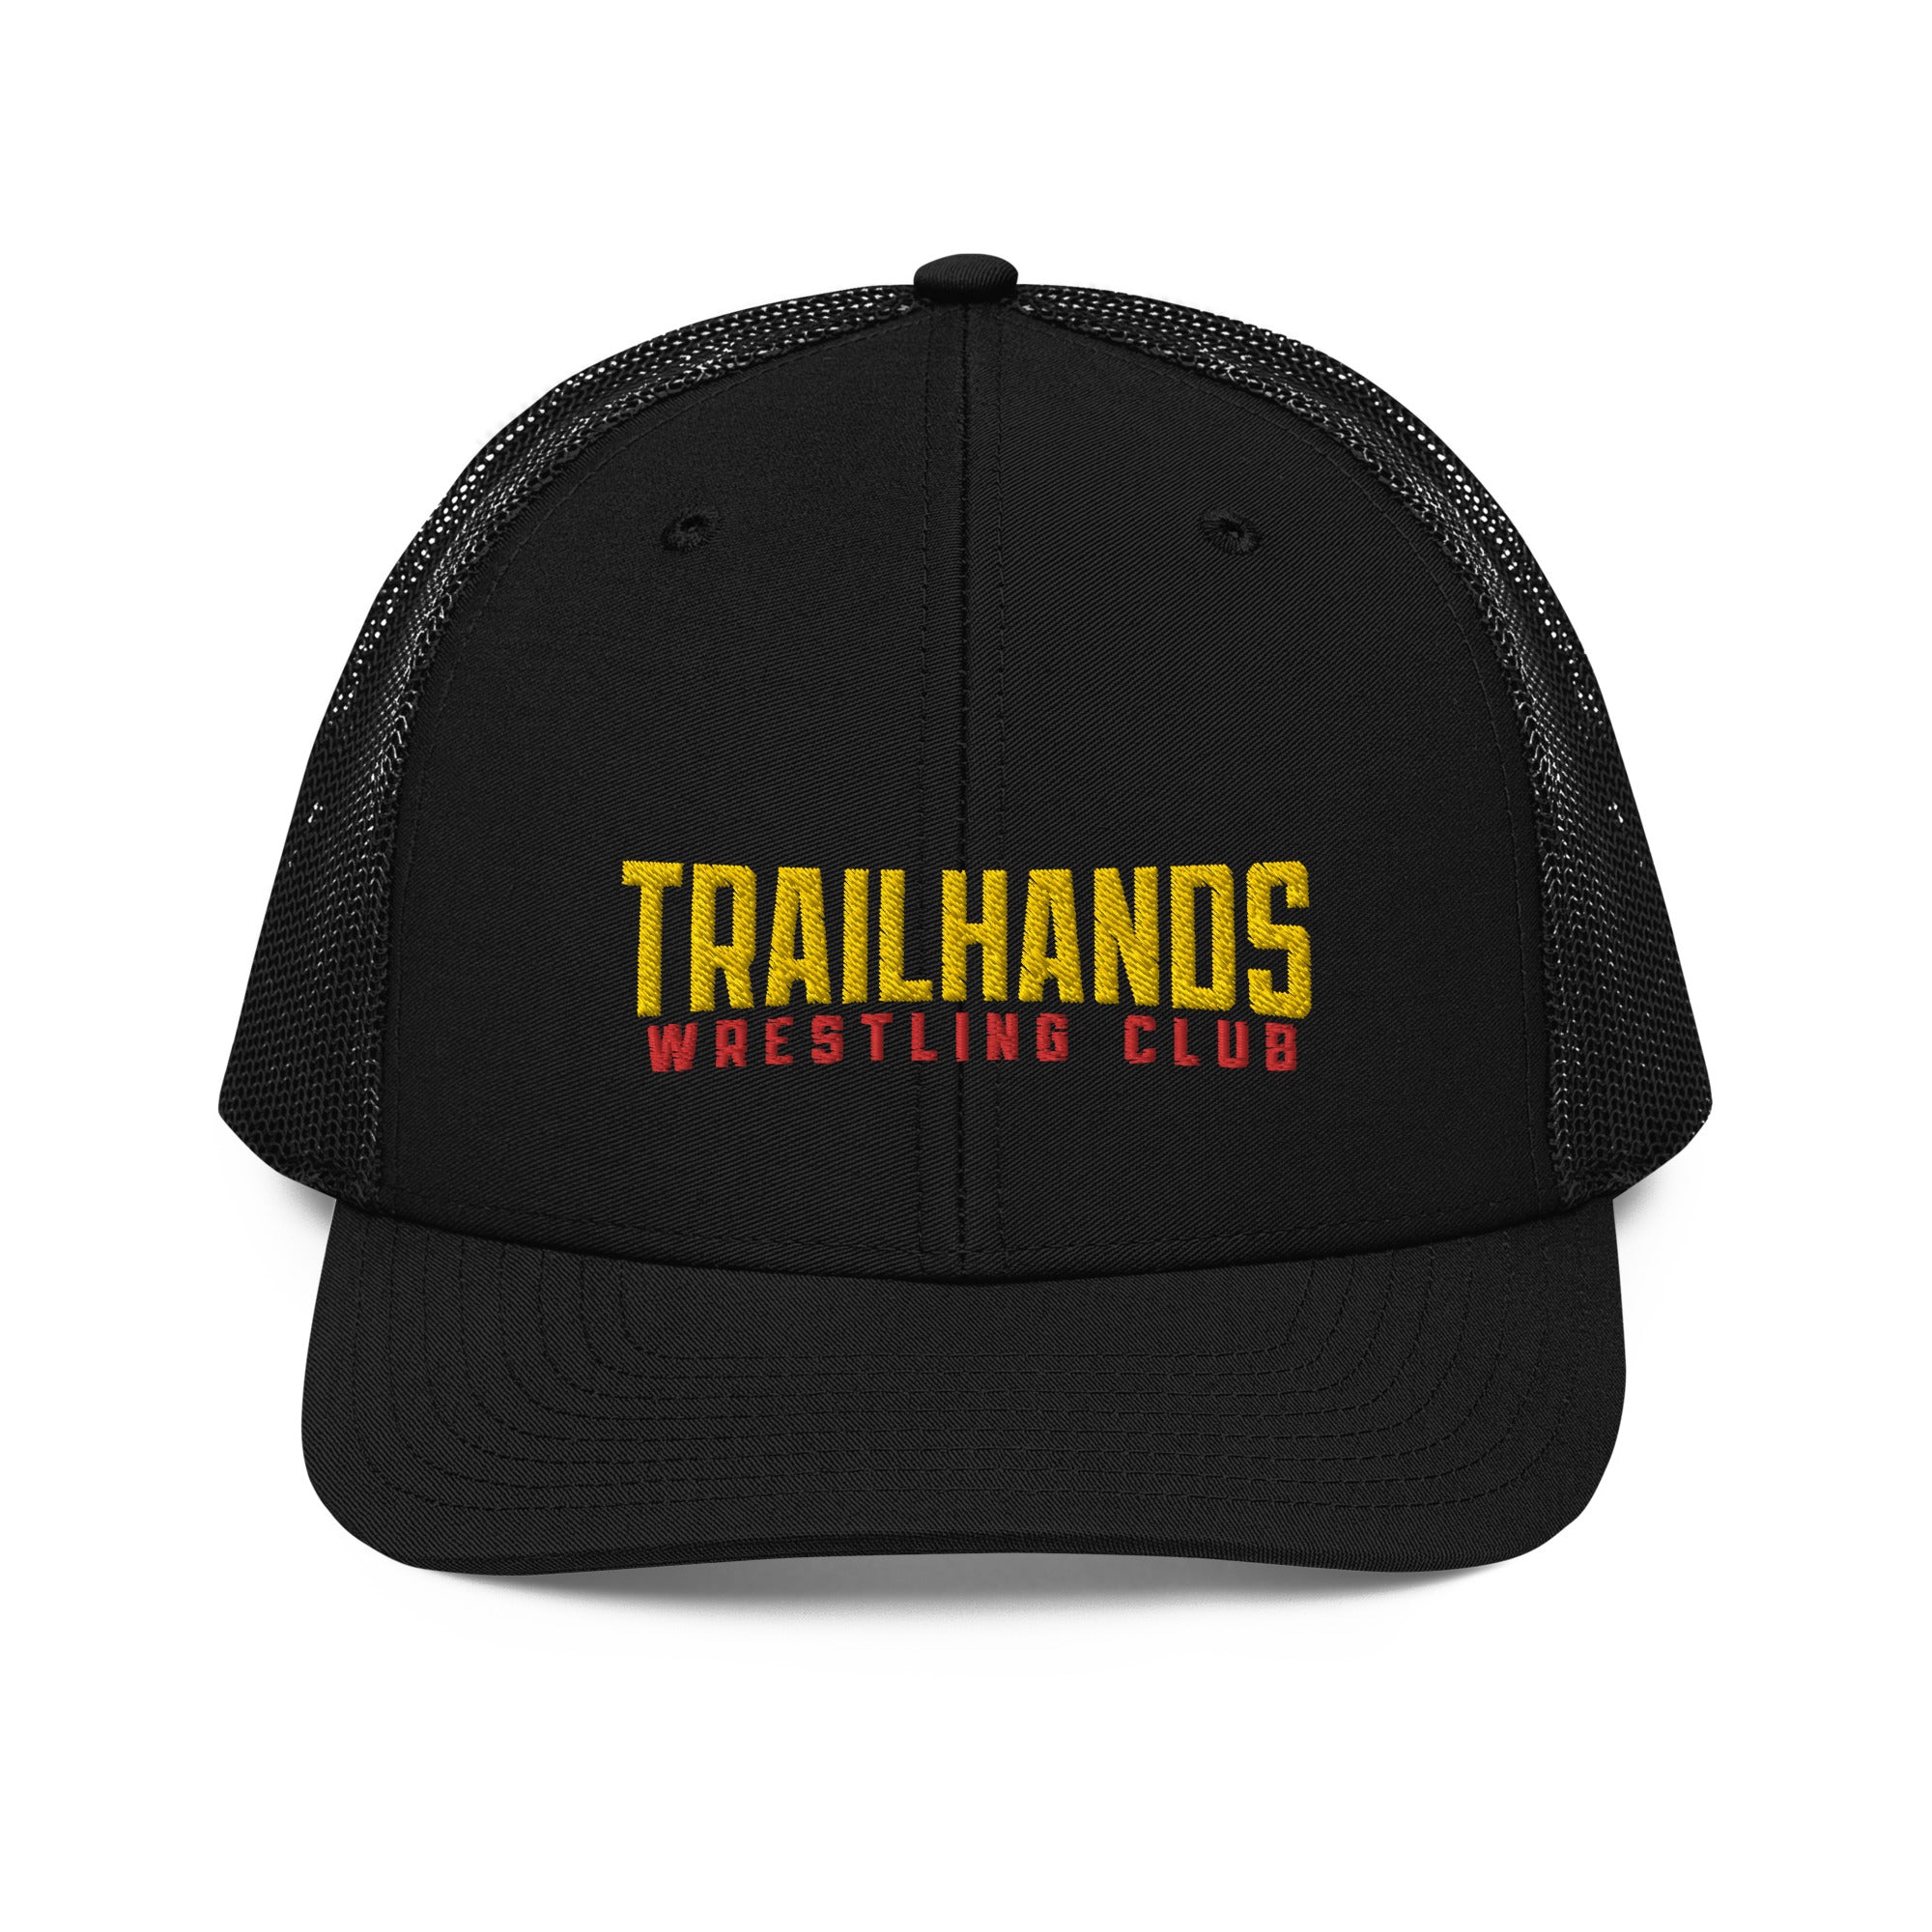 Trailhands Wrestling Club Trucker Cap